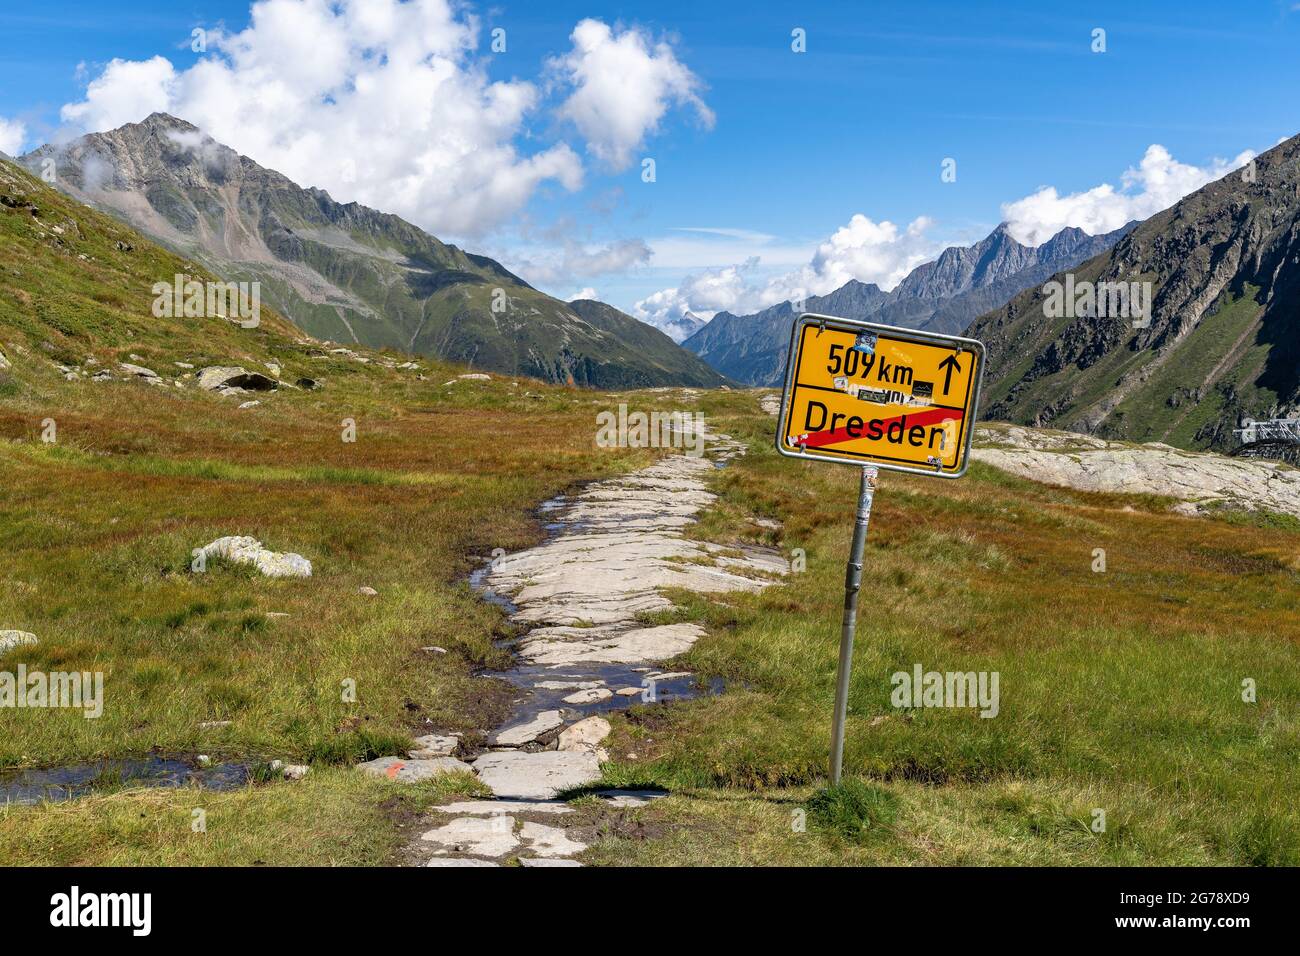 Europe, Austria, Tyrol, Stubai Alps, view from the Dresdner Hut in the Stubai Stock Photo